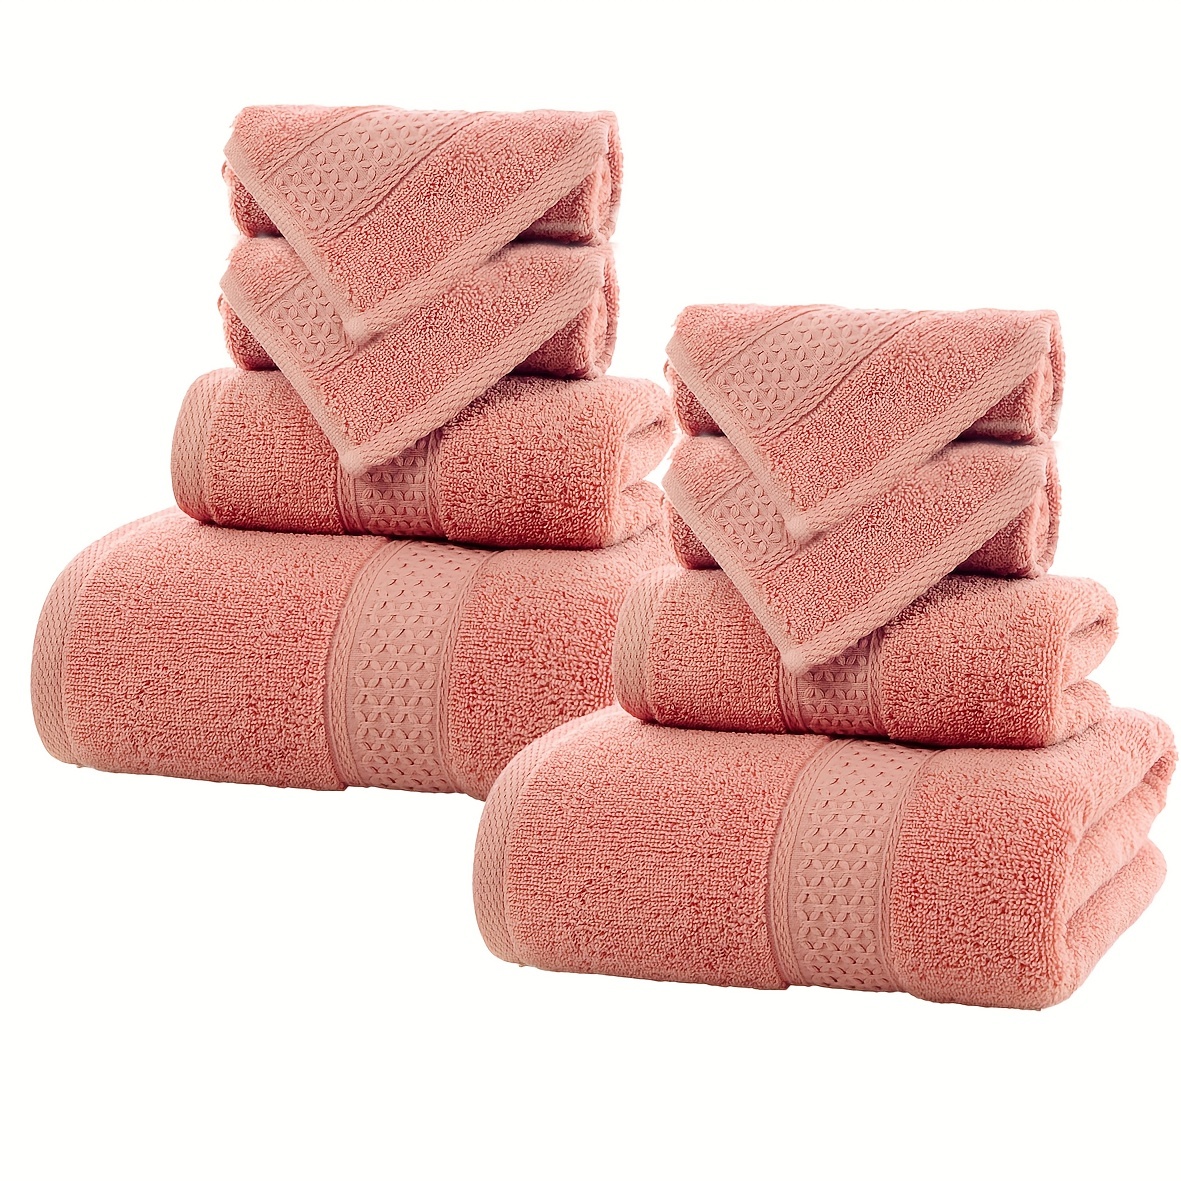 Solid Color Towels Set, Soft Absorbent Towel For Bathroom, 2 Bath